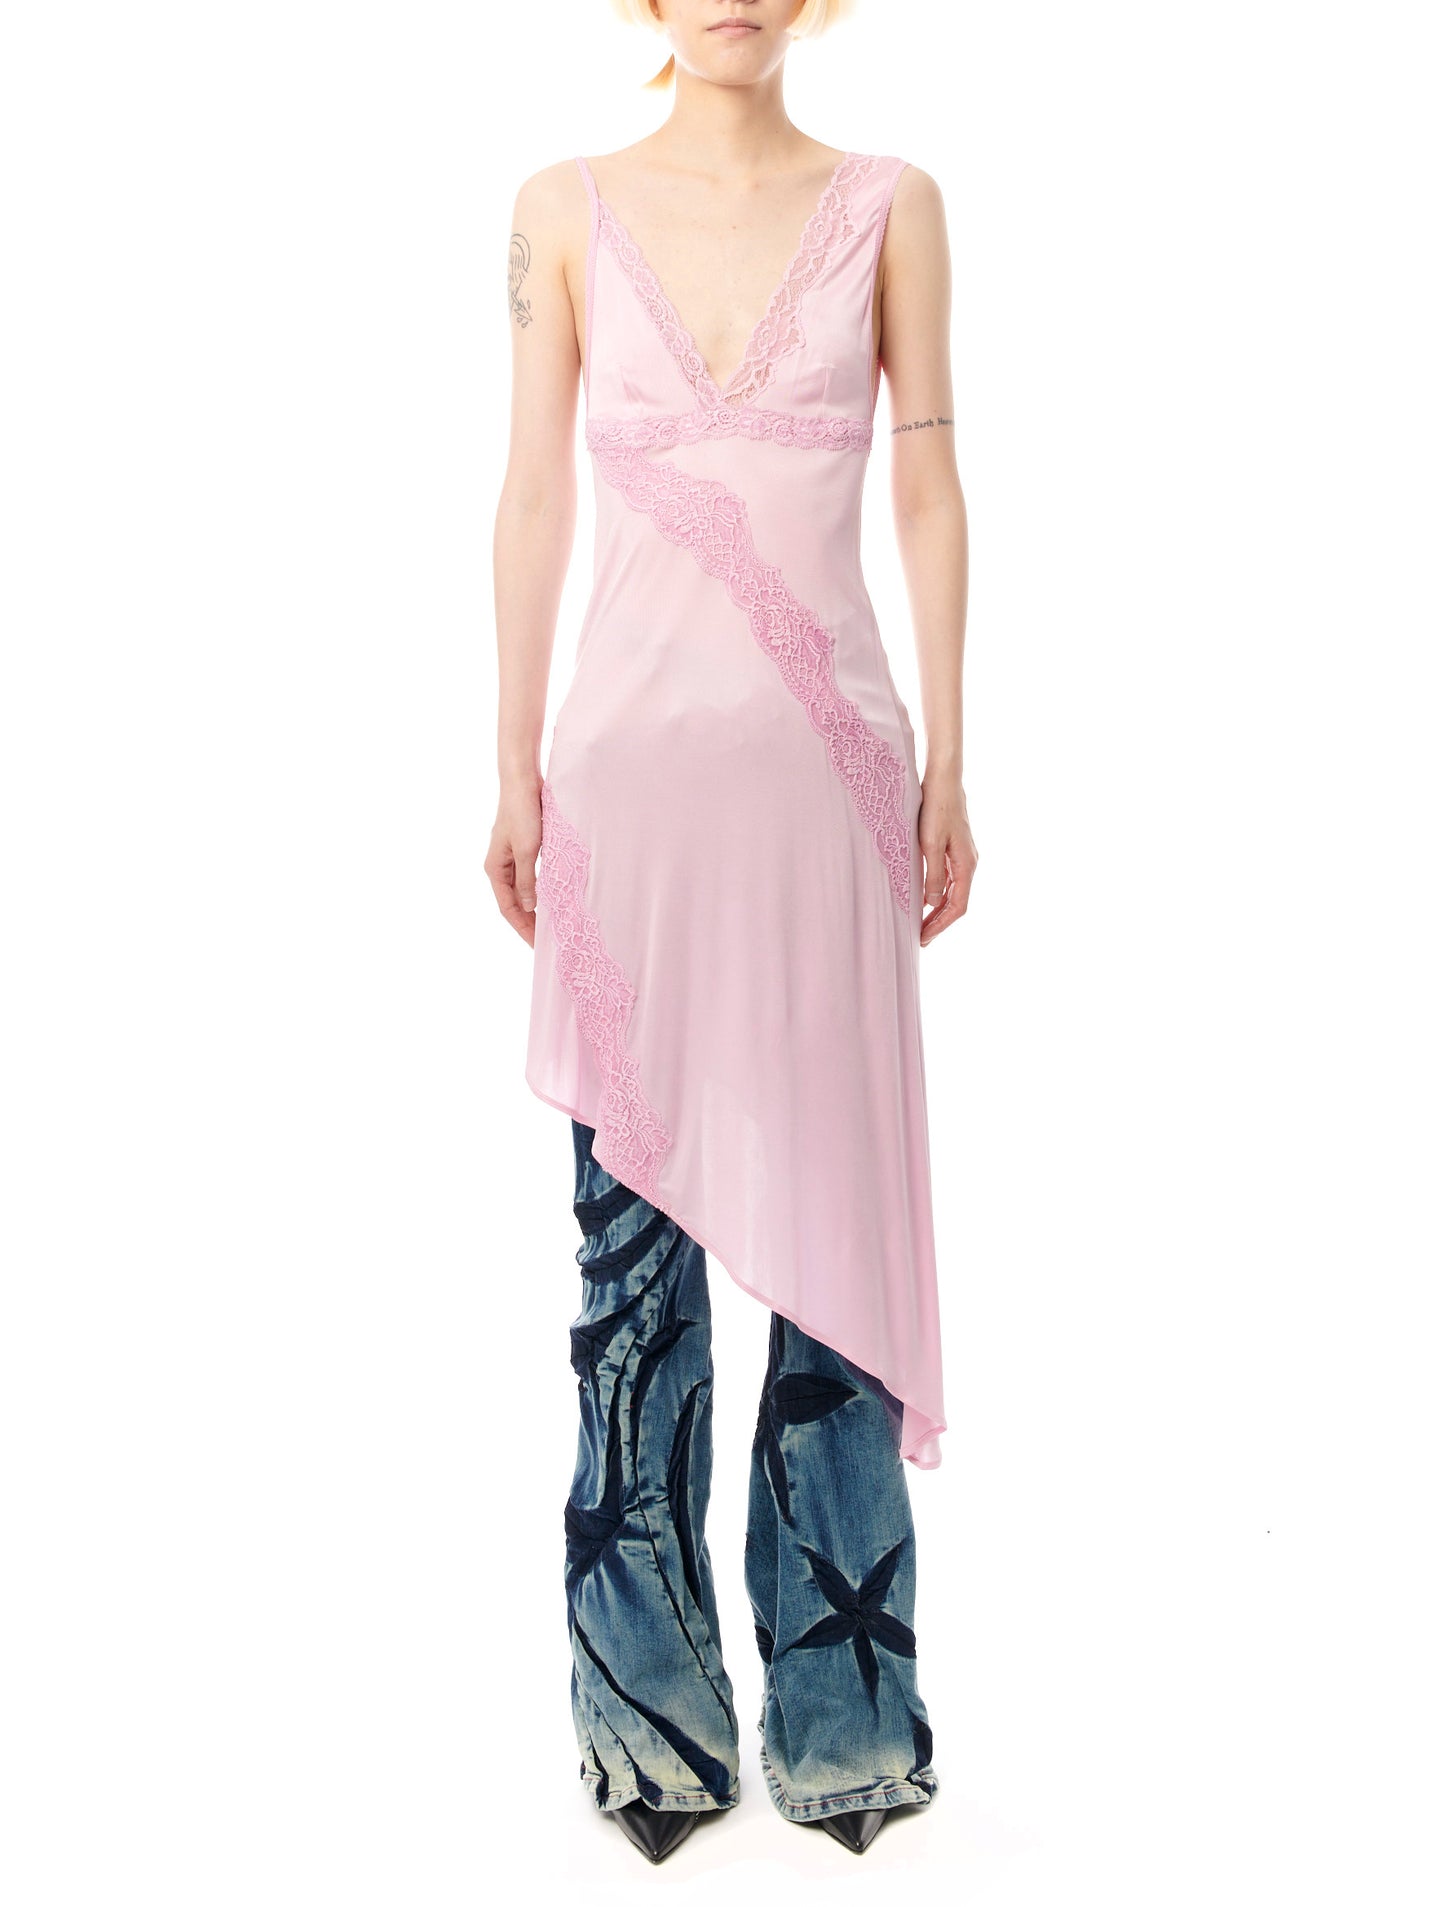 Vaillant Asymmetrical Pink Lace Dress